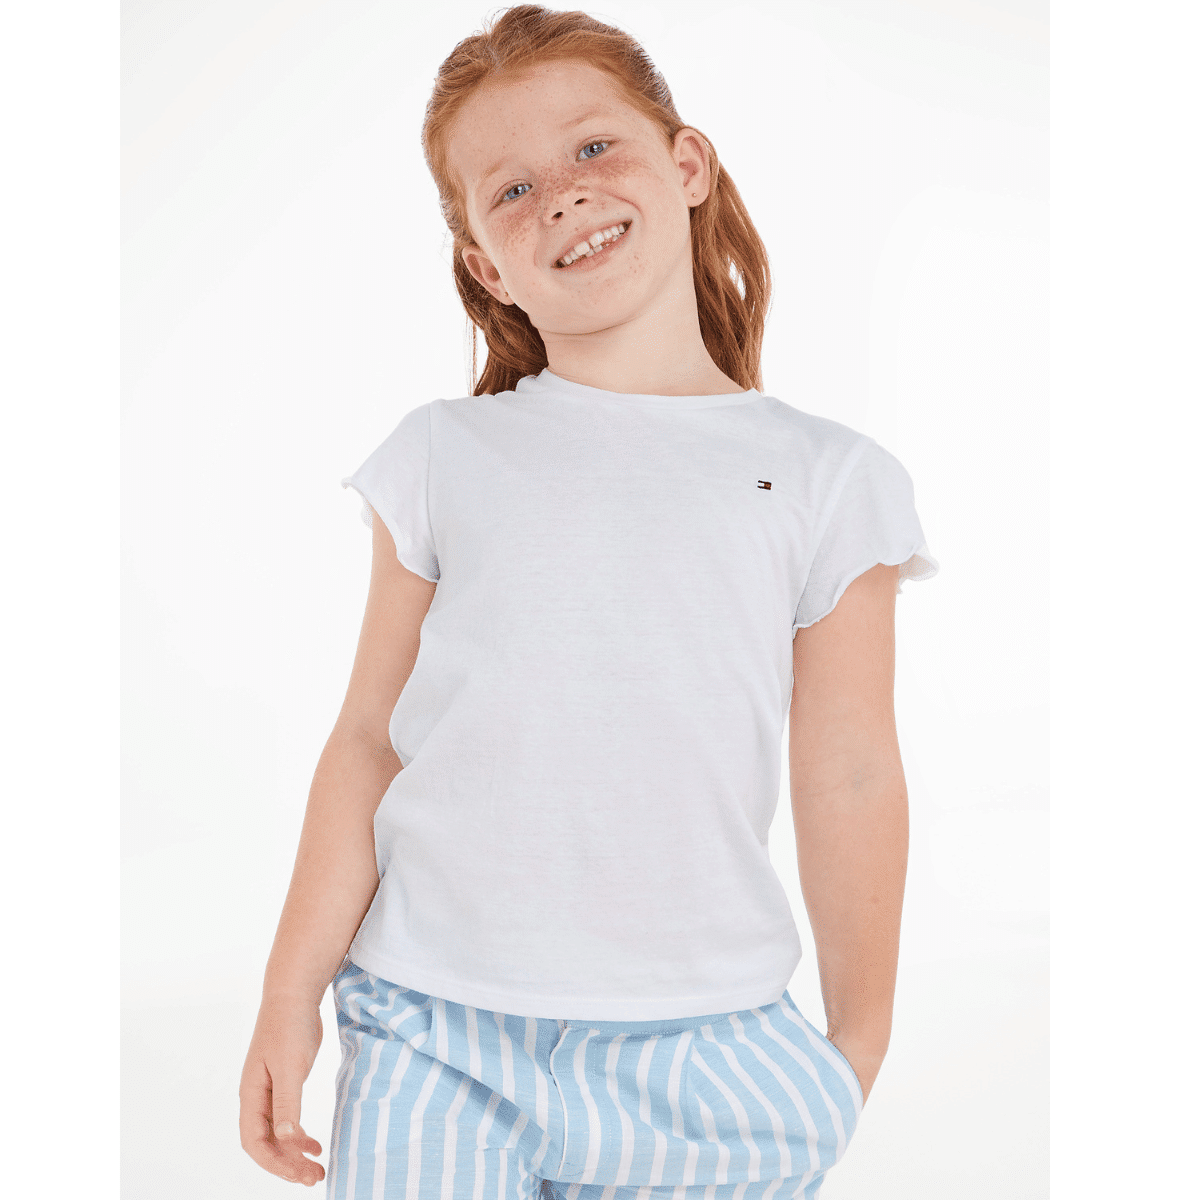 Tommy Hilfiger Foil Girls Graphic Tee - Kids Life Clothing - Children's  designer clothing